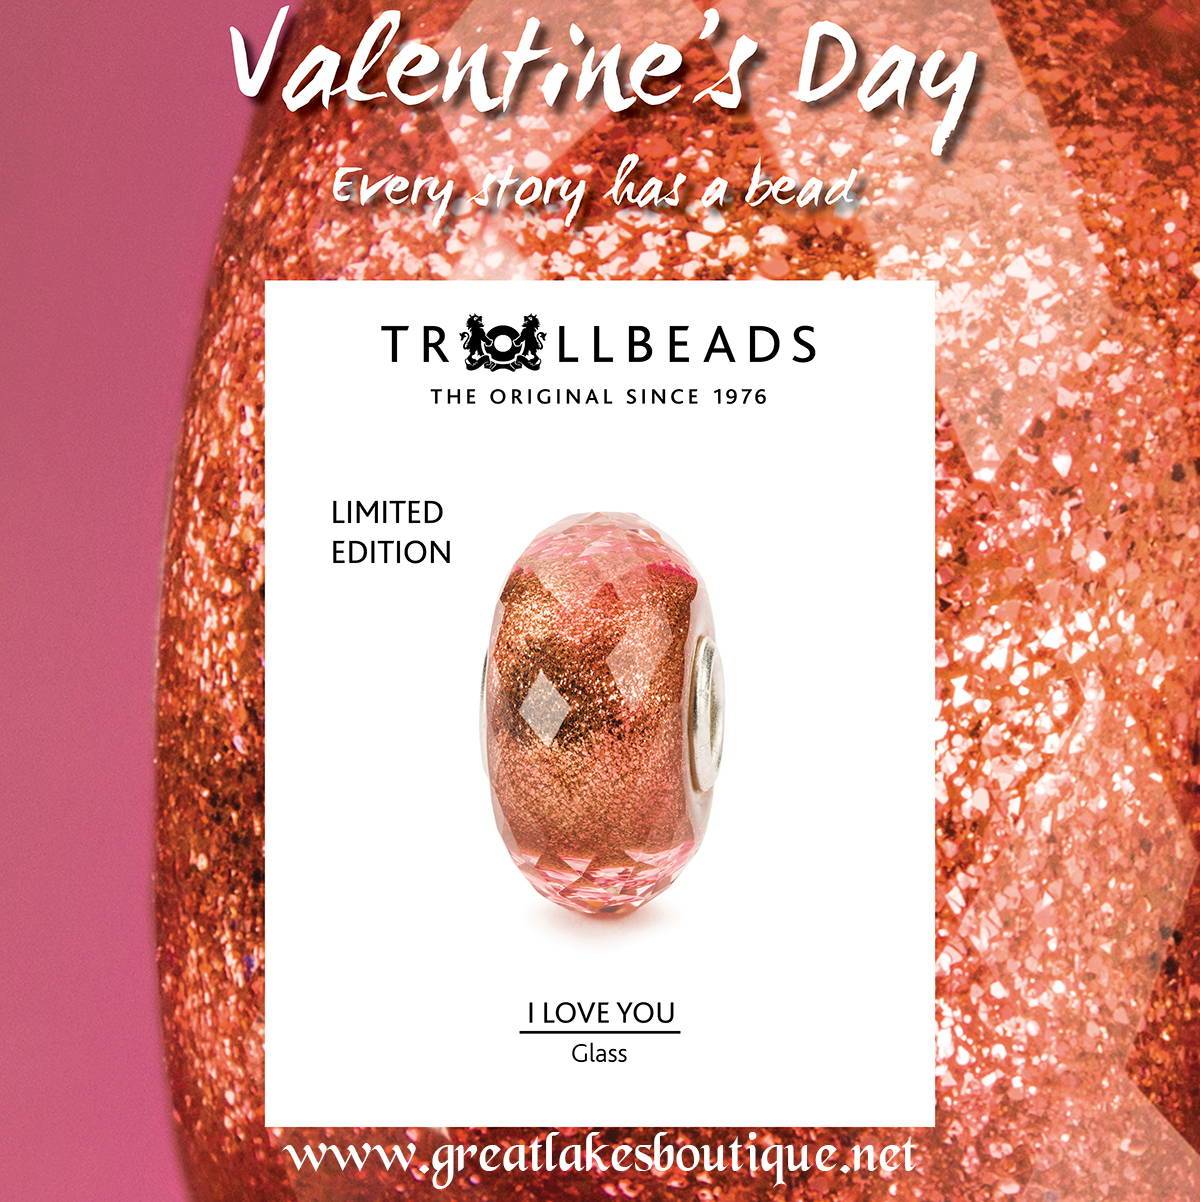 Trollbeads Valentine's Day 2021